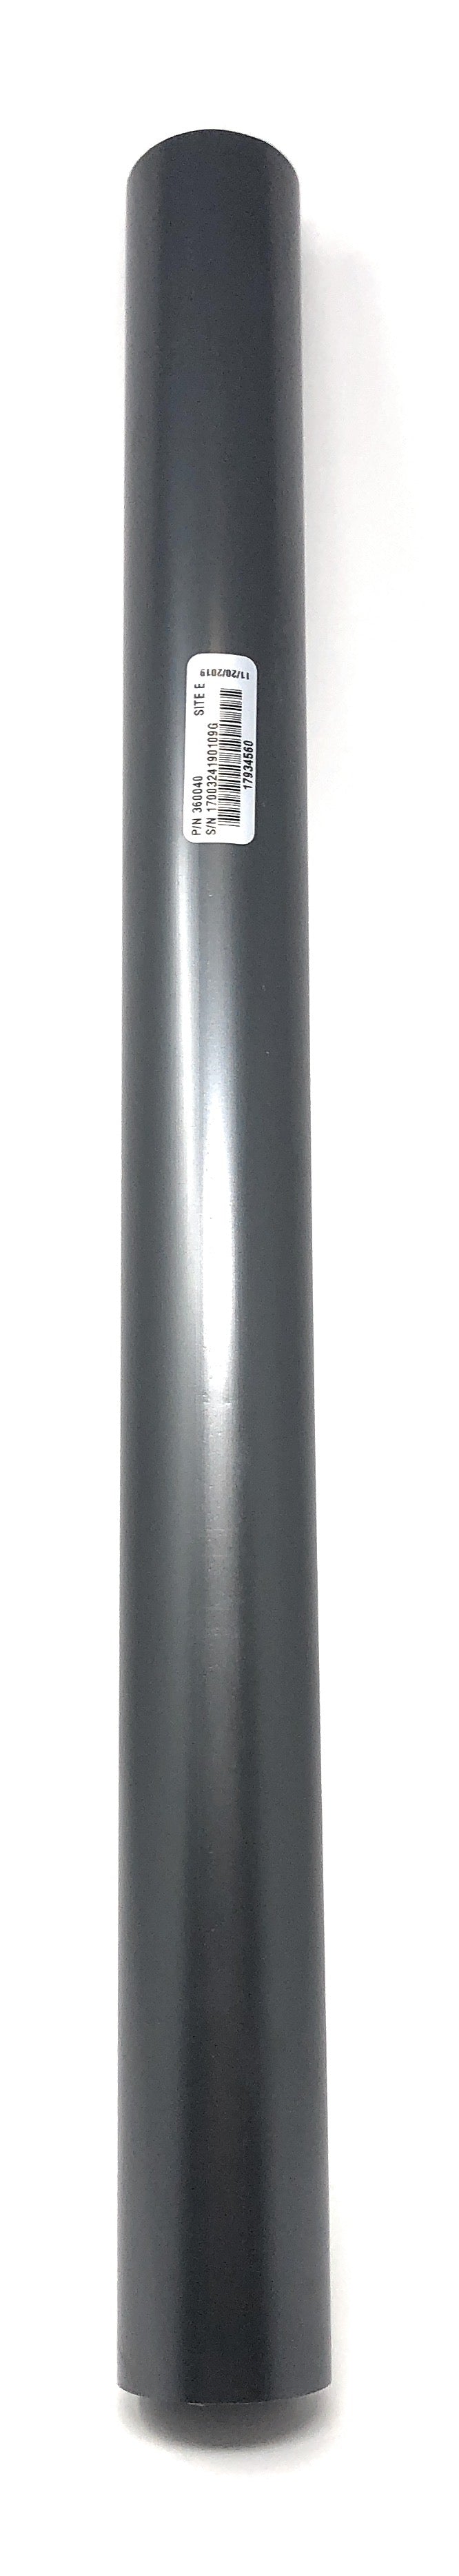 Top View - Pentair Kreepy Krauly Drive Tube (contains 1 tube) - ePoolSupply